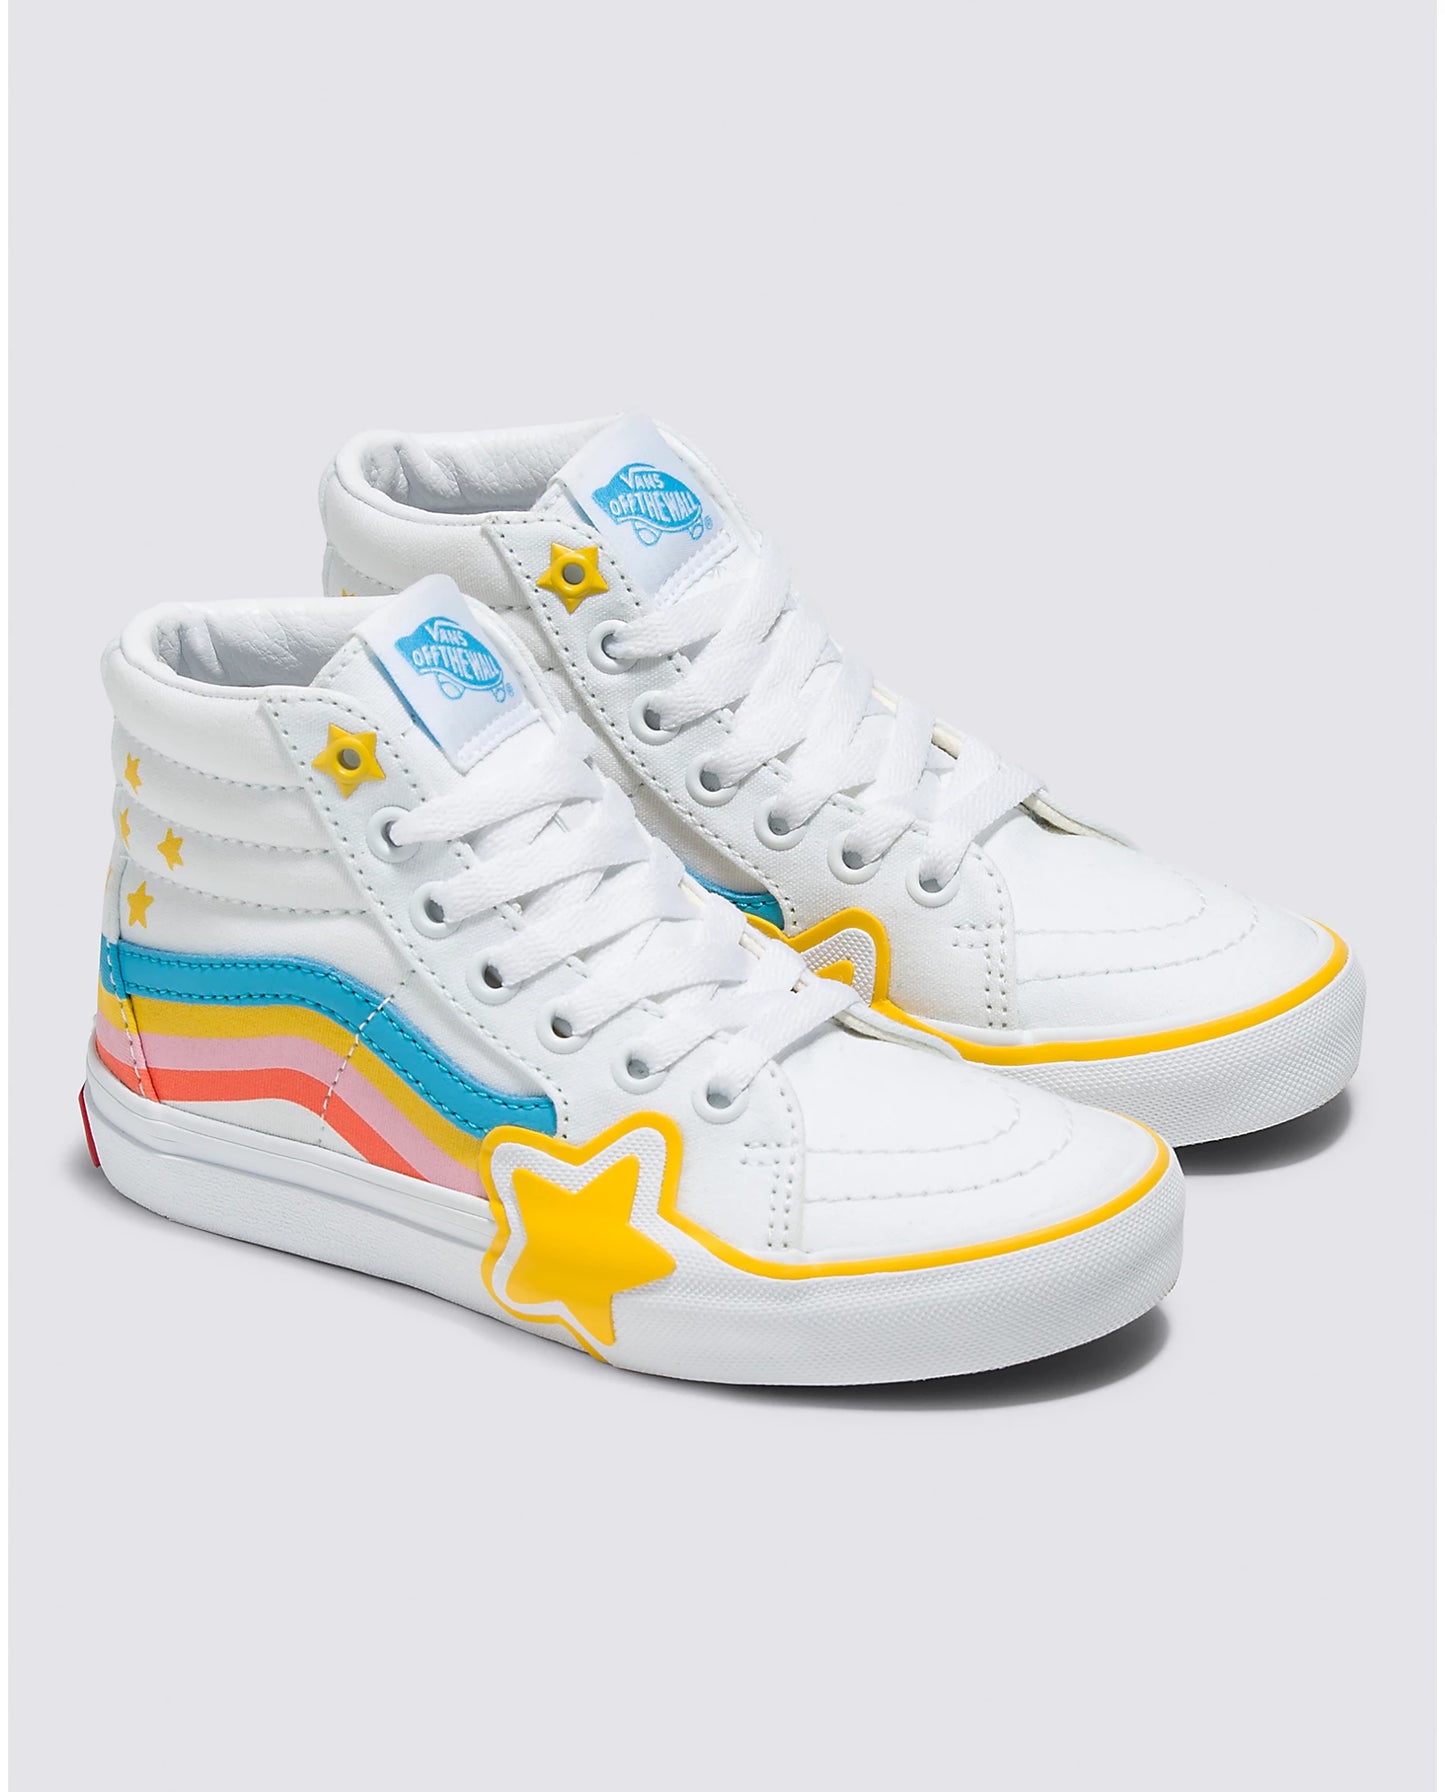 VANS SK8-Hi Rainbow Star Youth Shoe - Rad Rainbow/True White